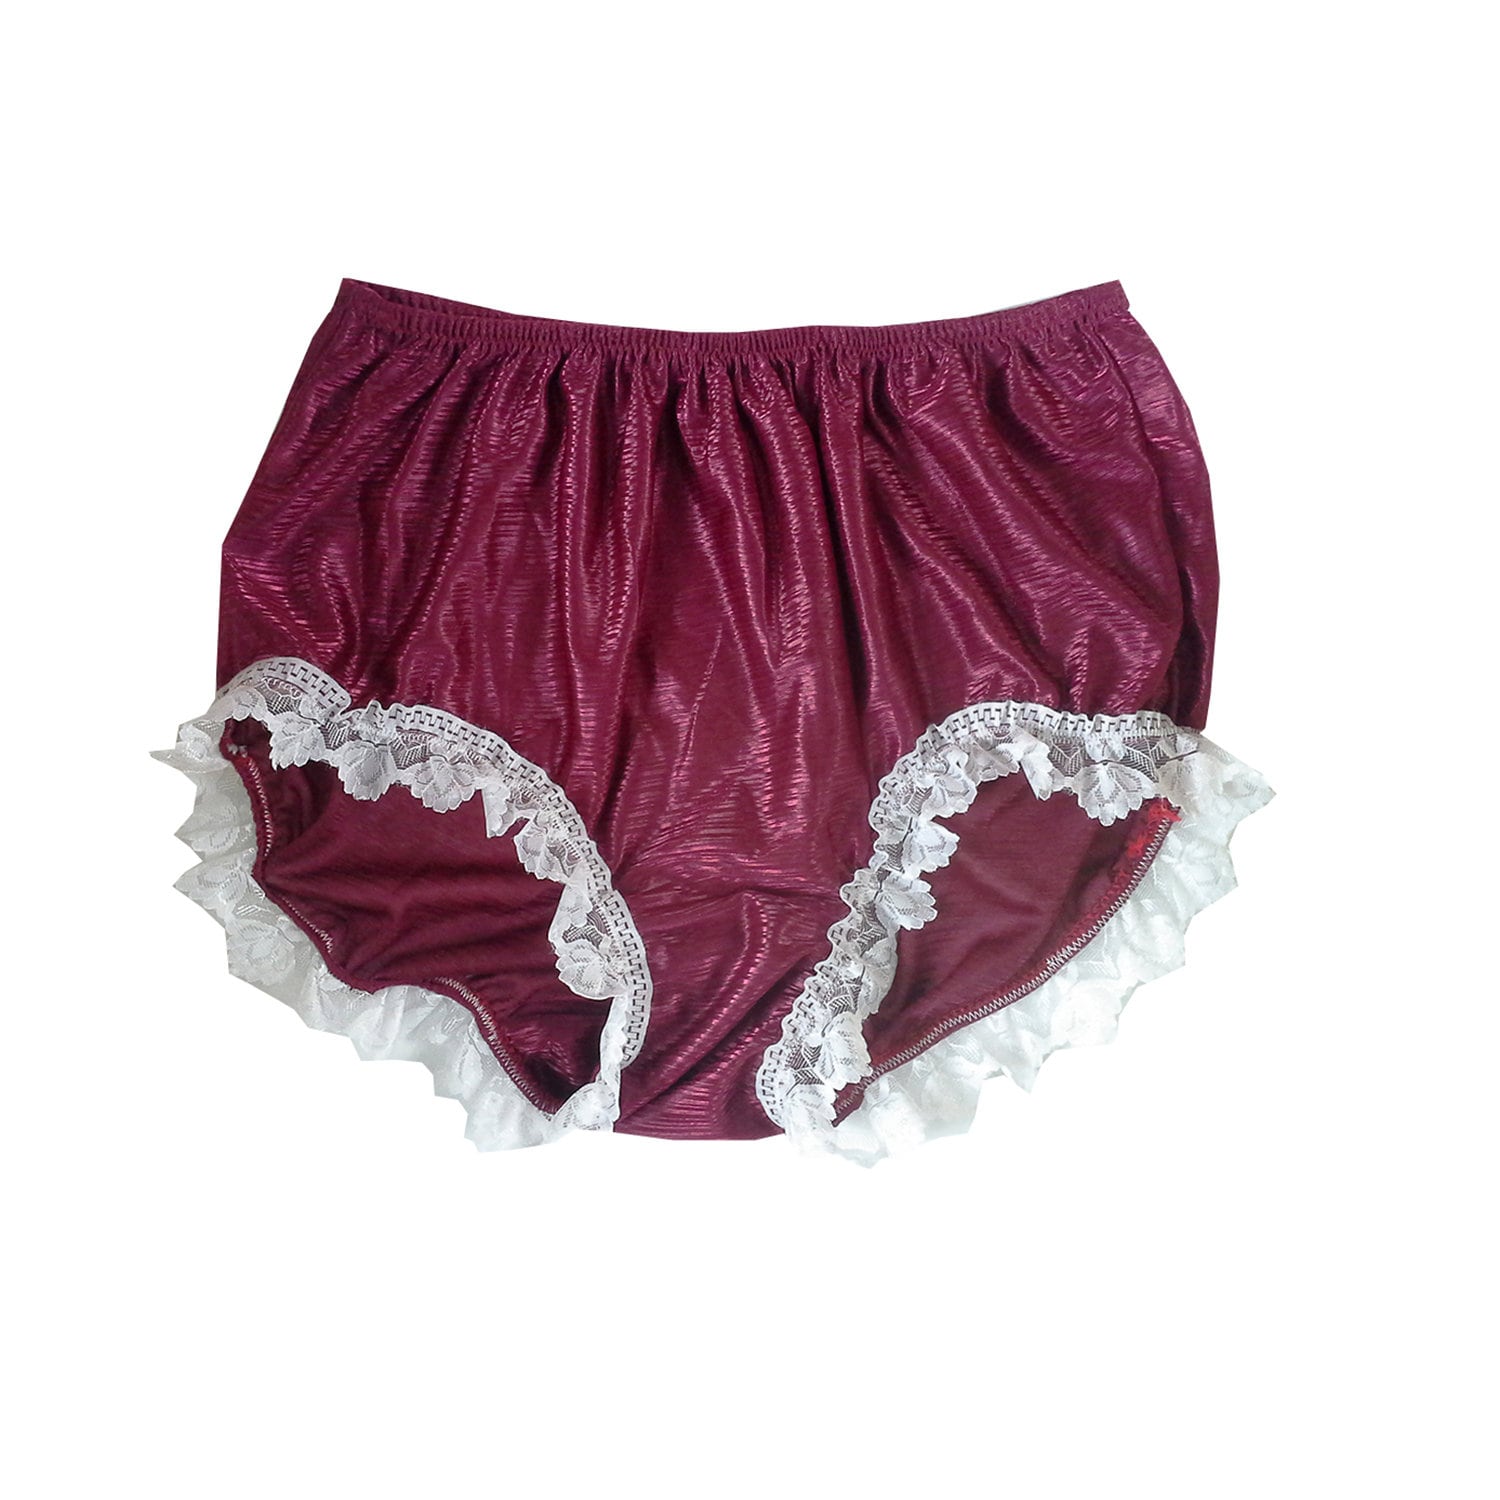 Choose 15 Color SFH24D Very Soft Granny Full Briefs Panties | Etsy